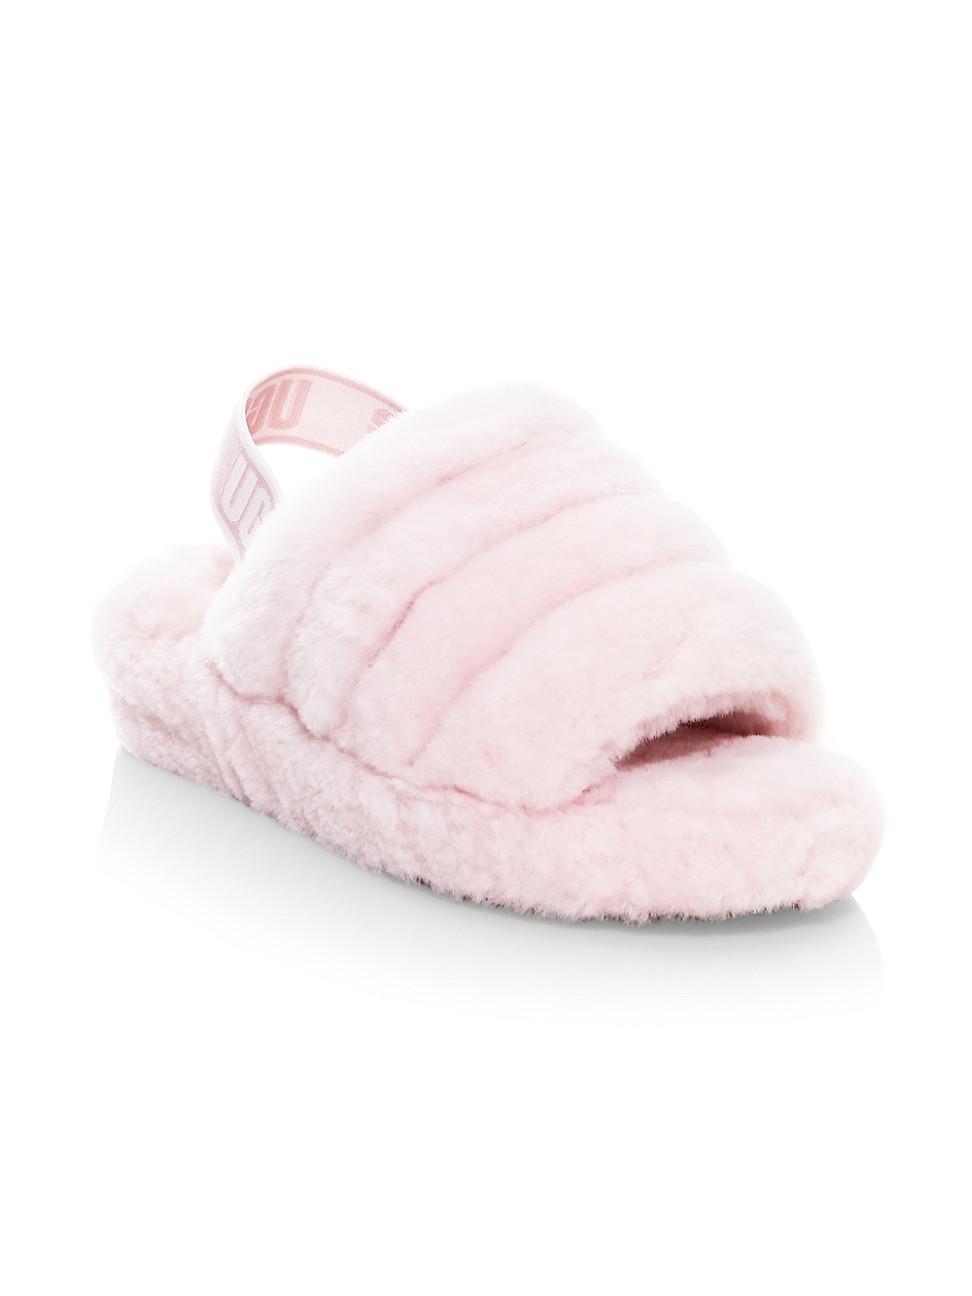 ugg slippers seashell pink